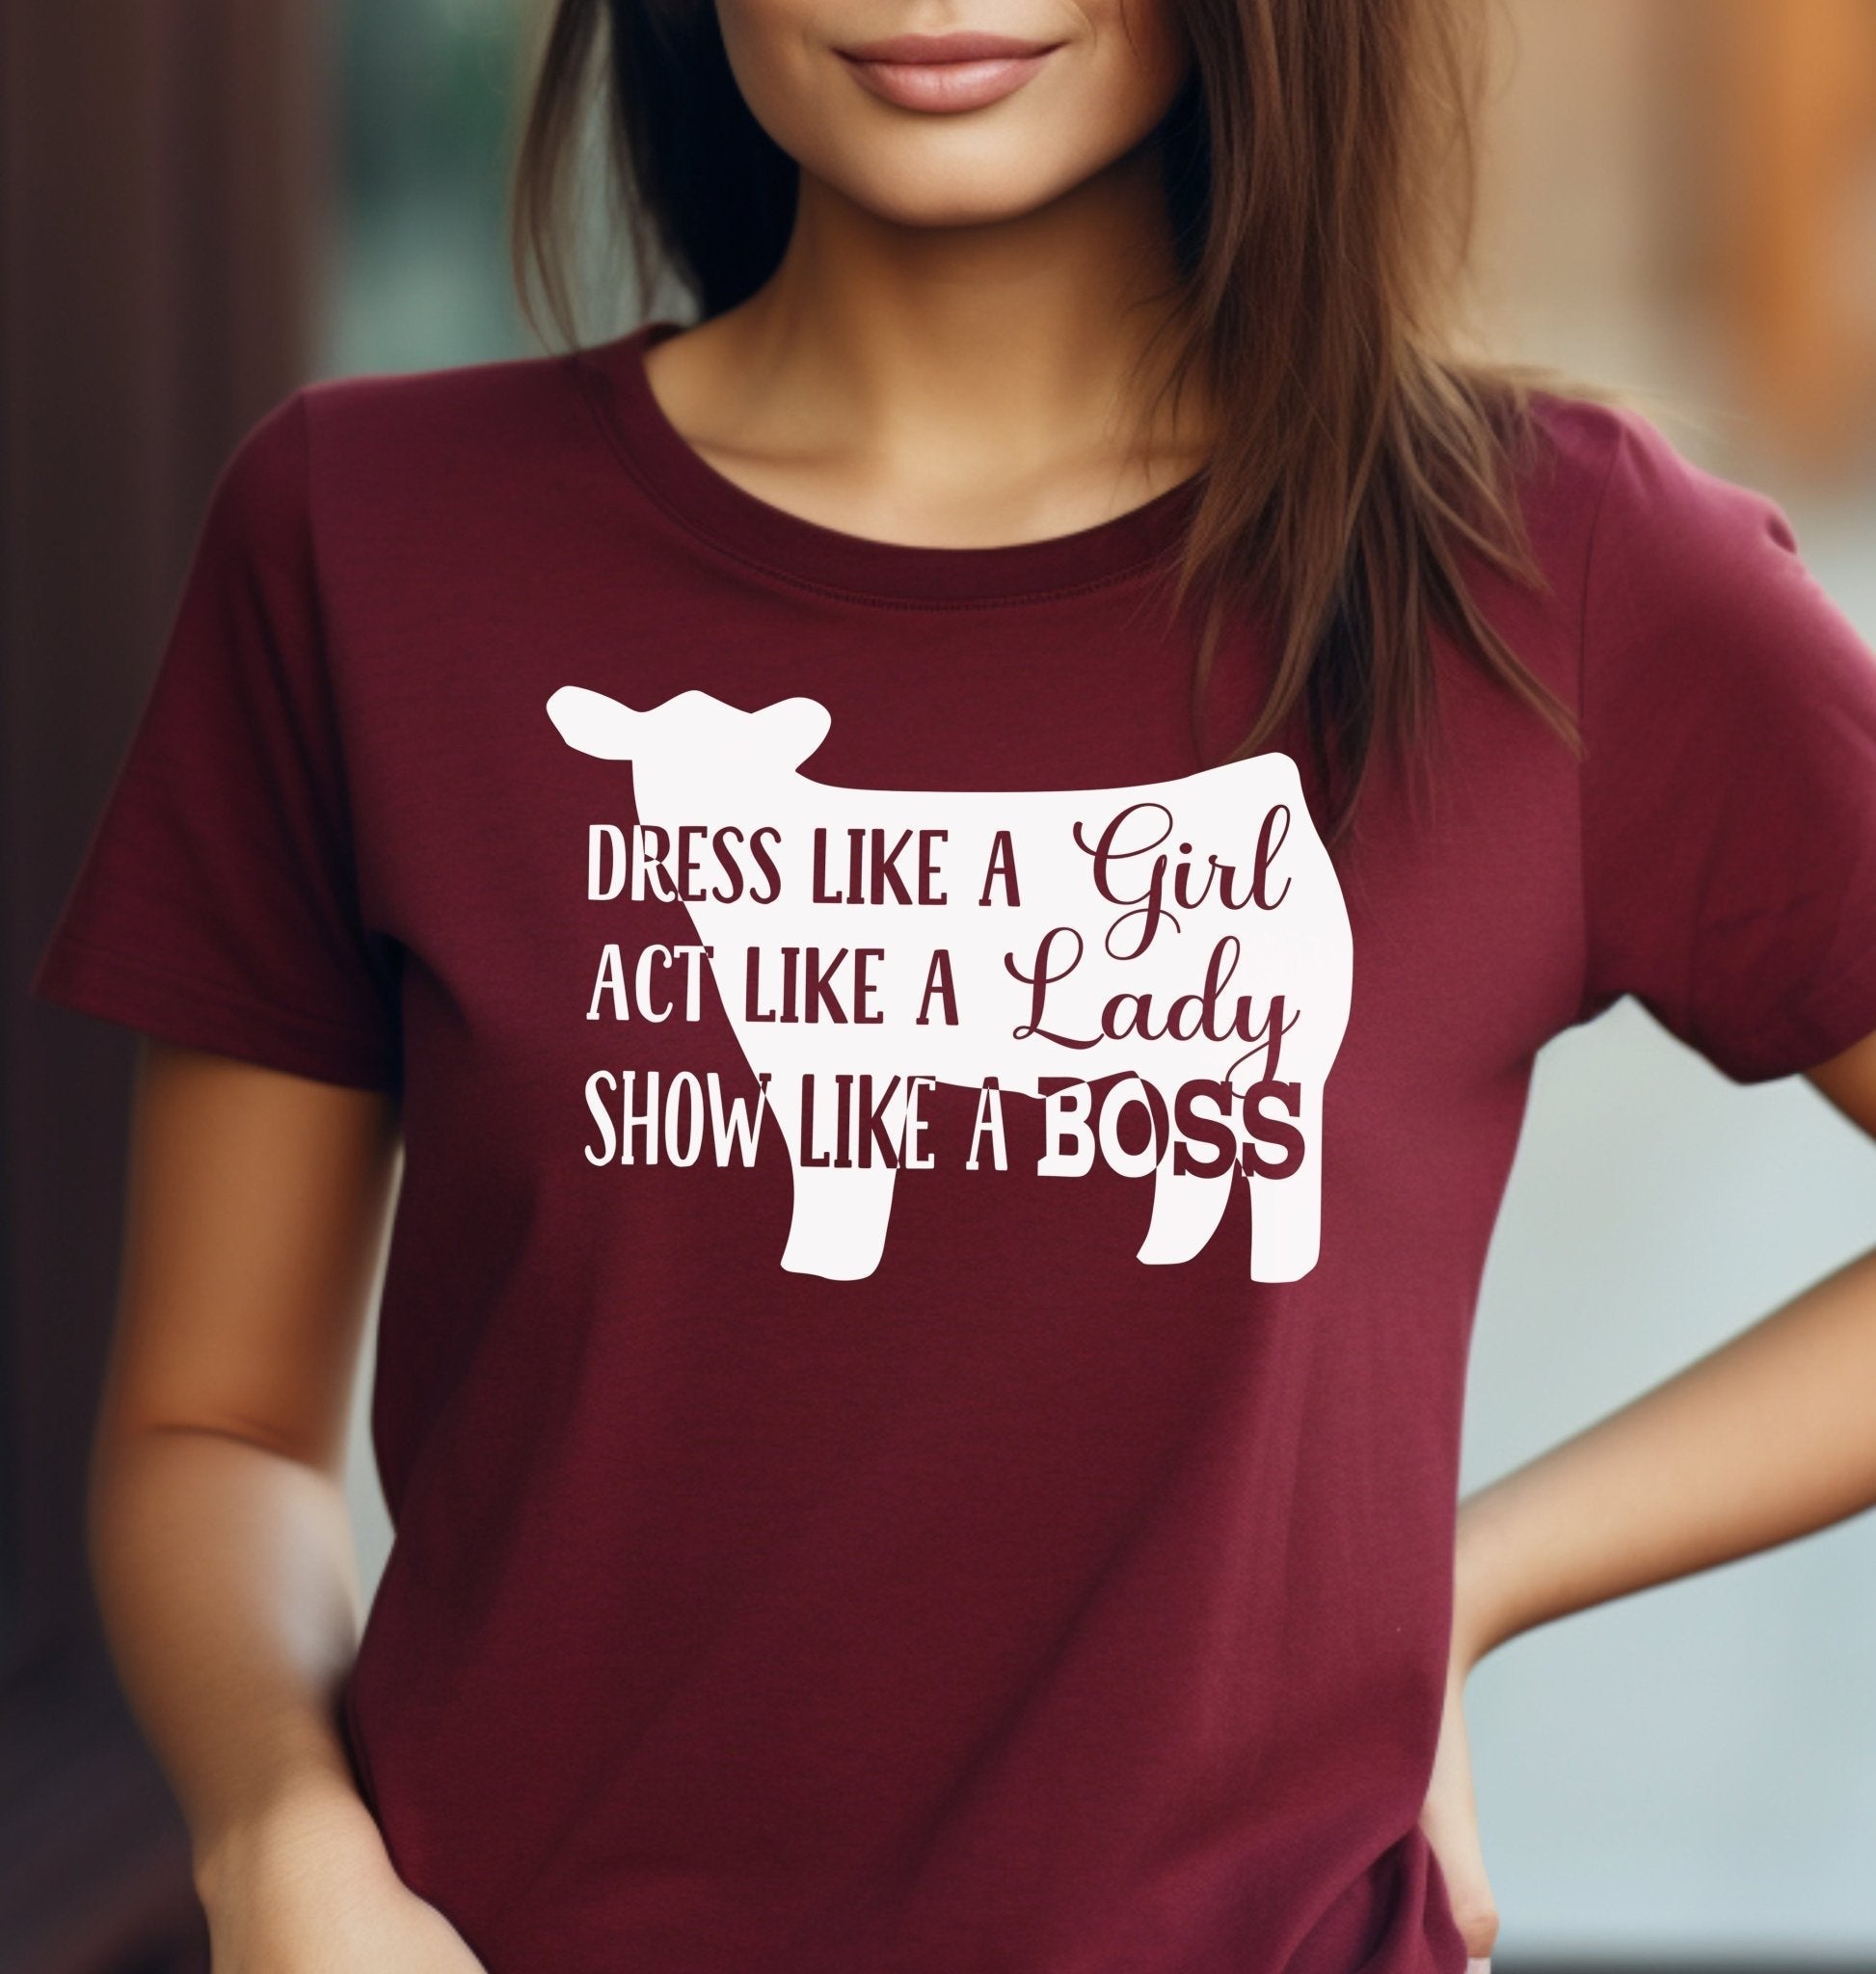 Dress Like a Girl, Act Like a Lady, Show (Beef) Like a Boss Adult/Youth Cotton T-Shirt - 1